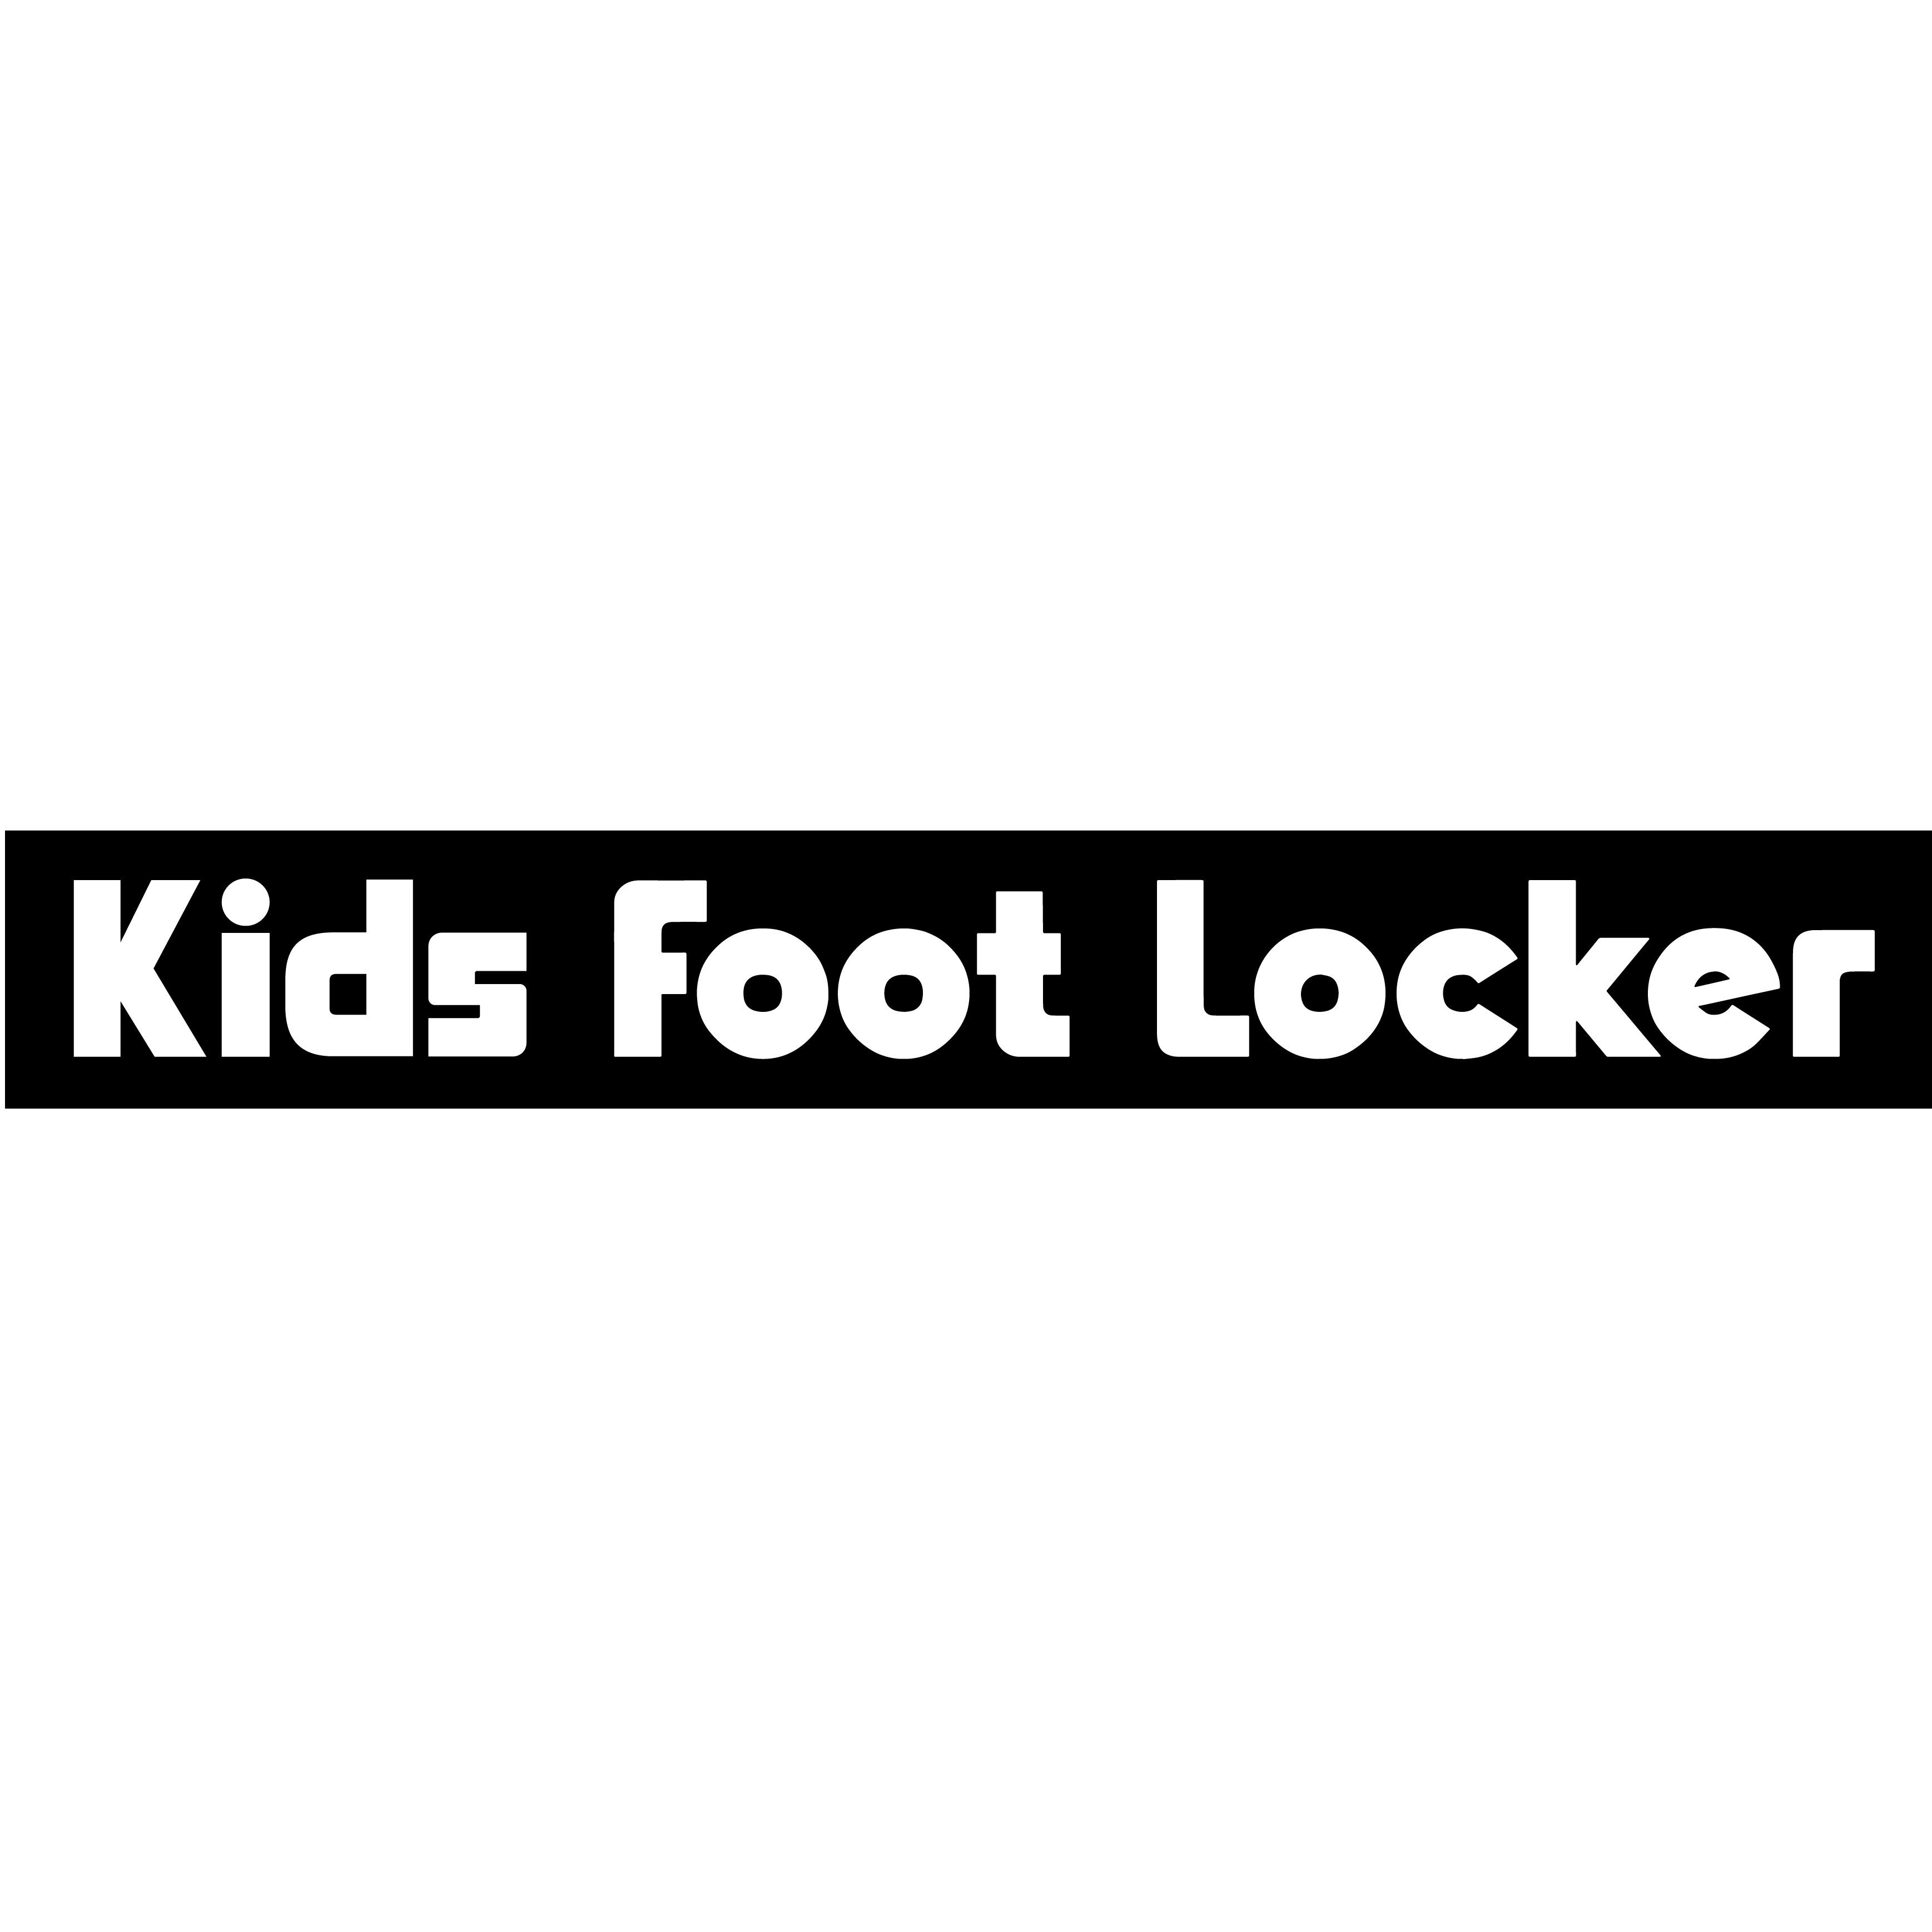 champion shoes kids footlocker